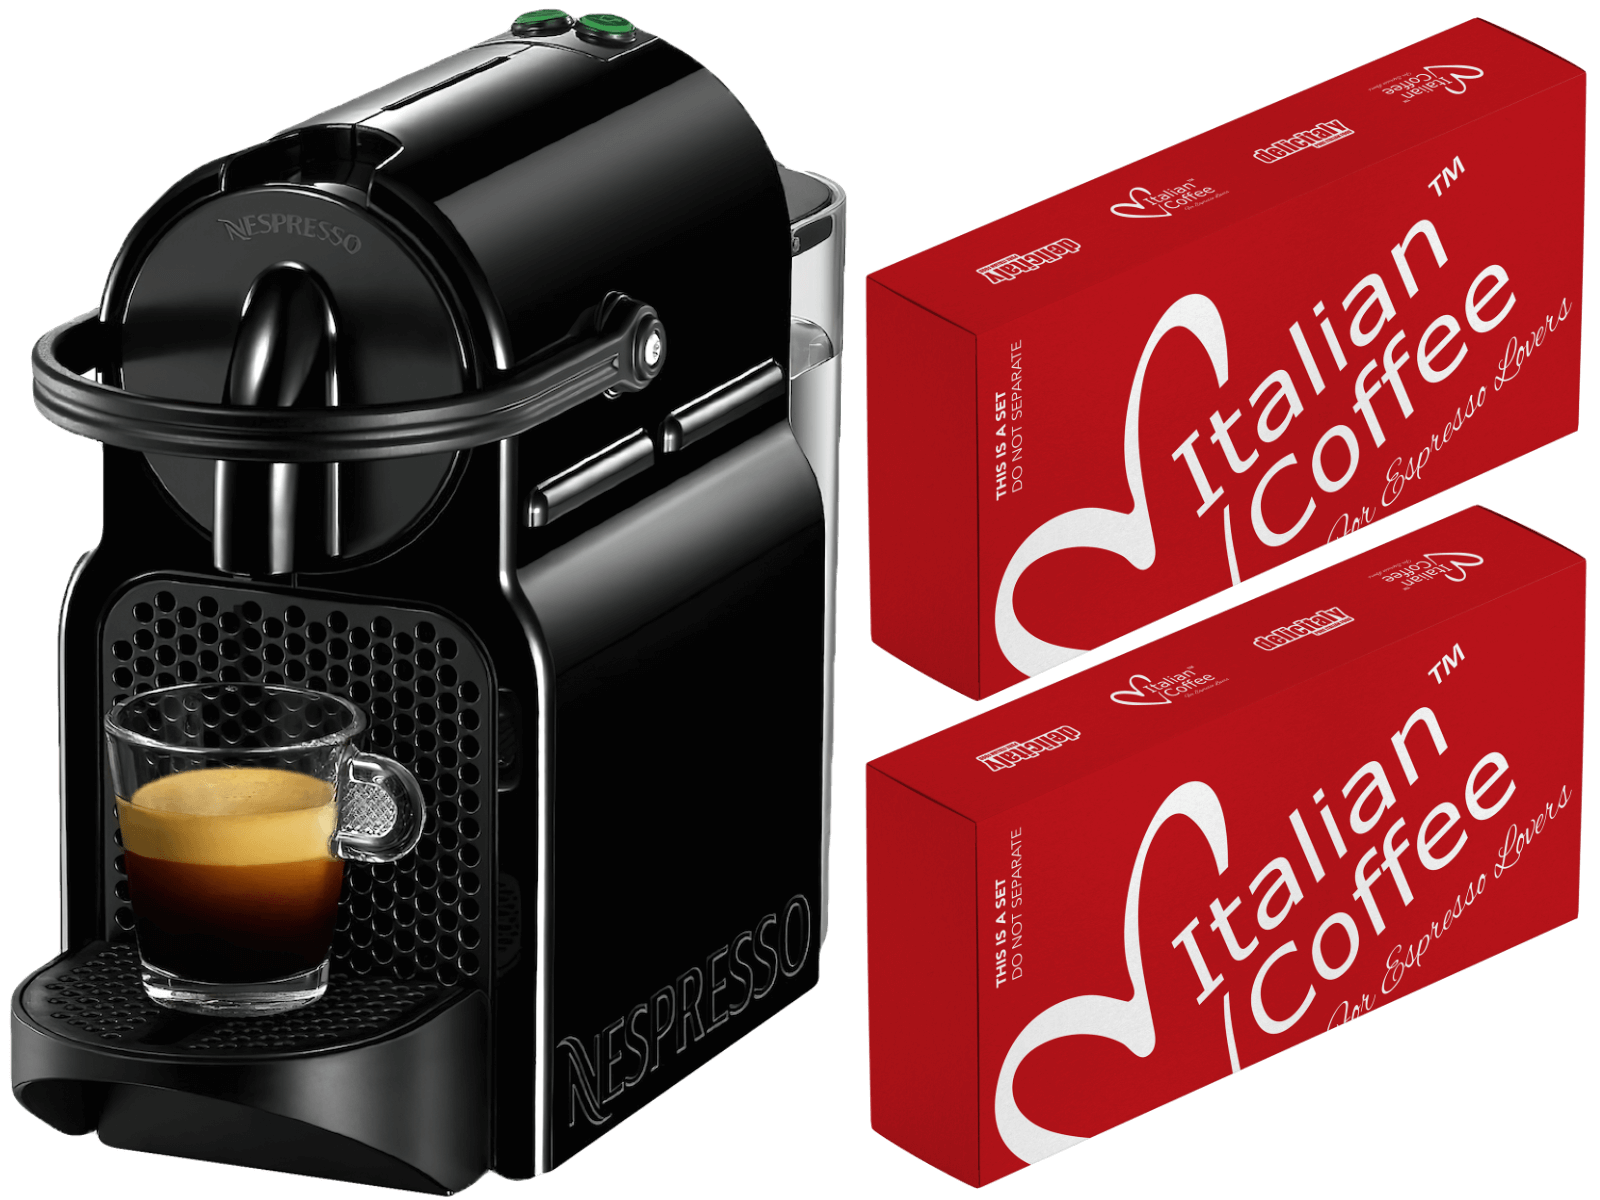 Inissia machine + 200 Italian Coffee capsules